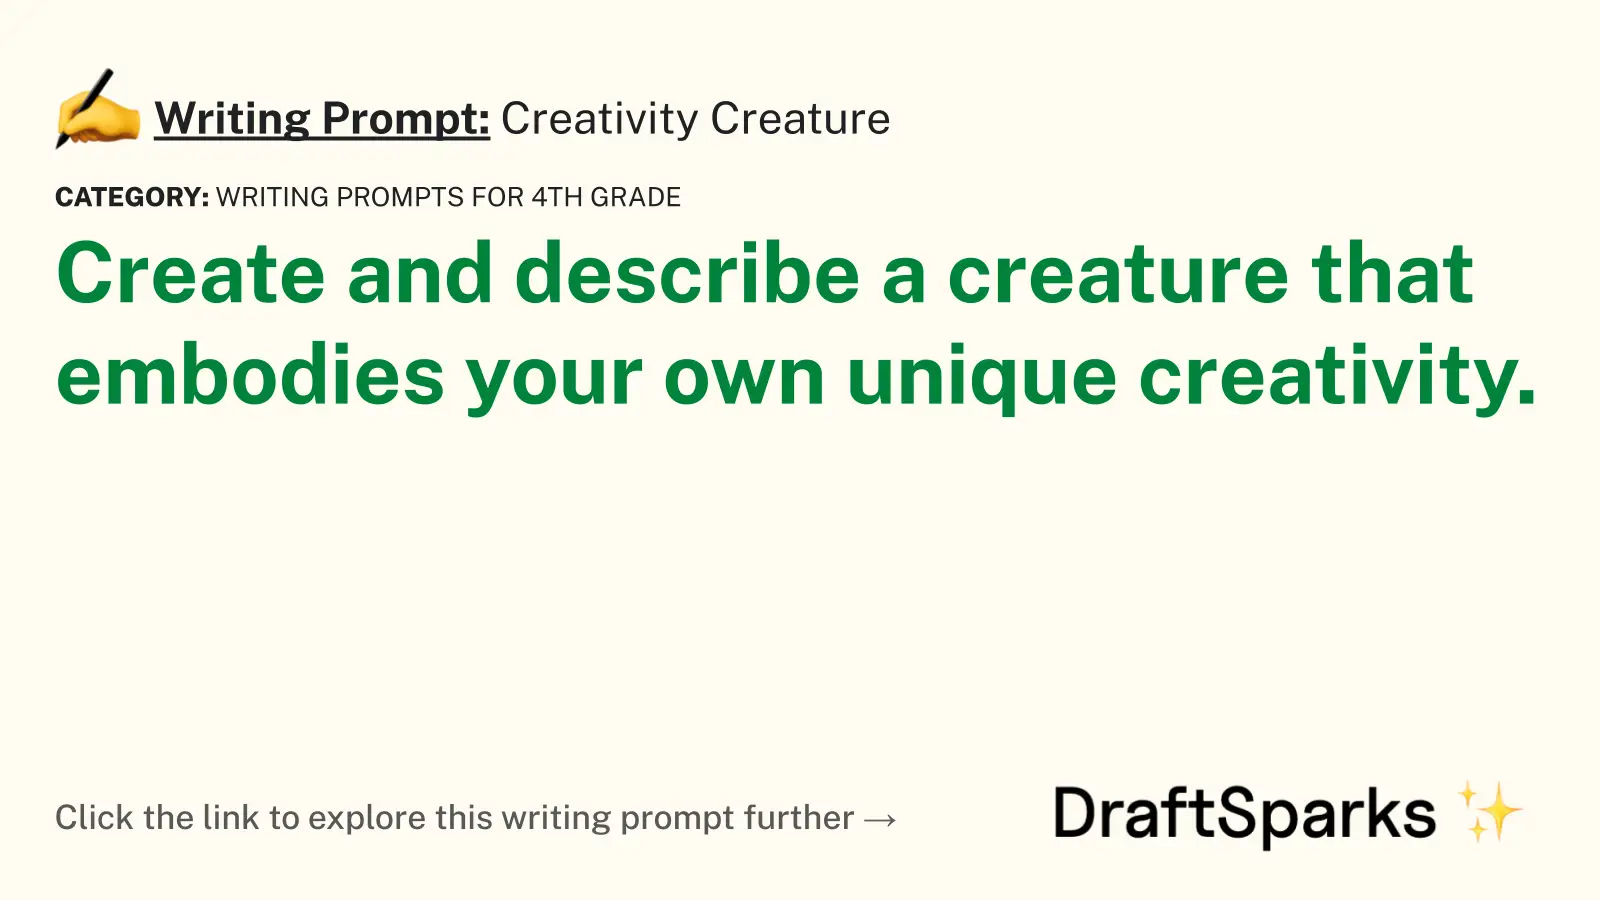 Creativity Creature